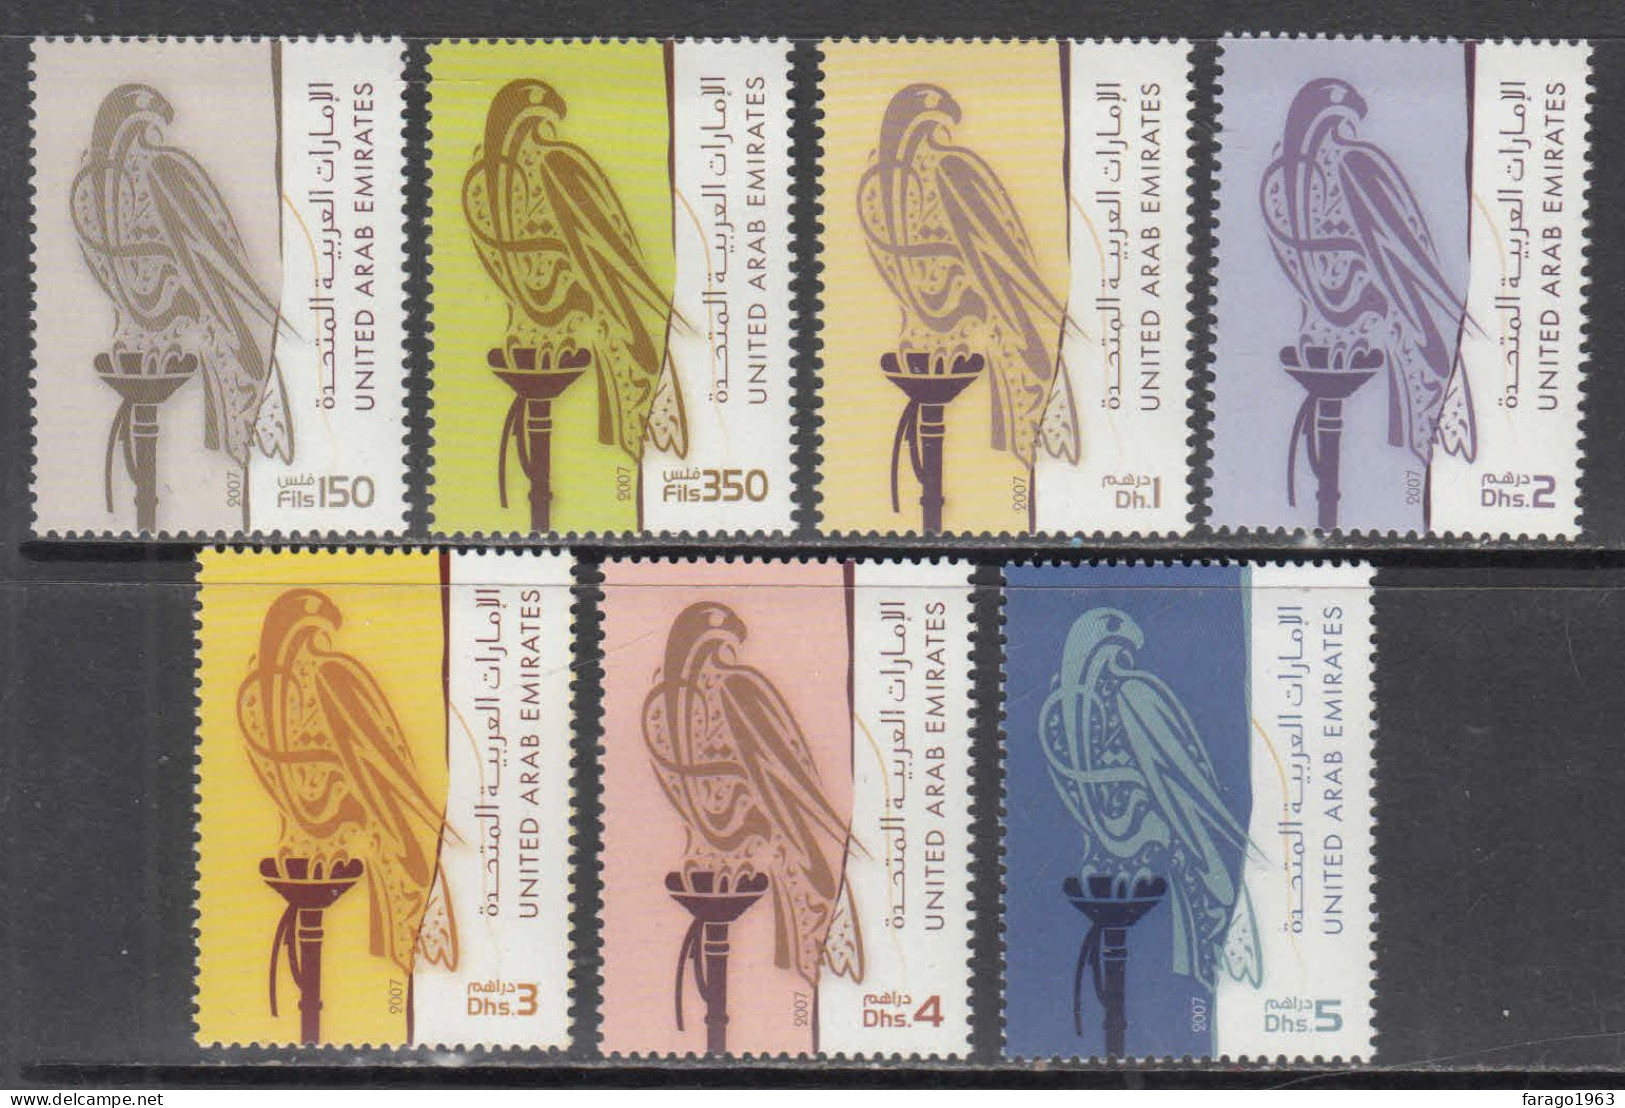 2007 United Arab Emirates Falcon Birds Definitive Complete Set Of 7 MNH - Verenigde Arabische Emiraten